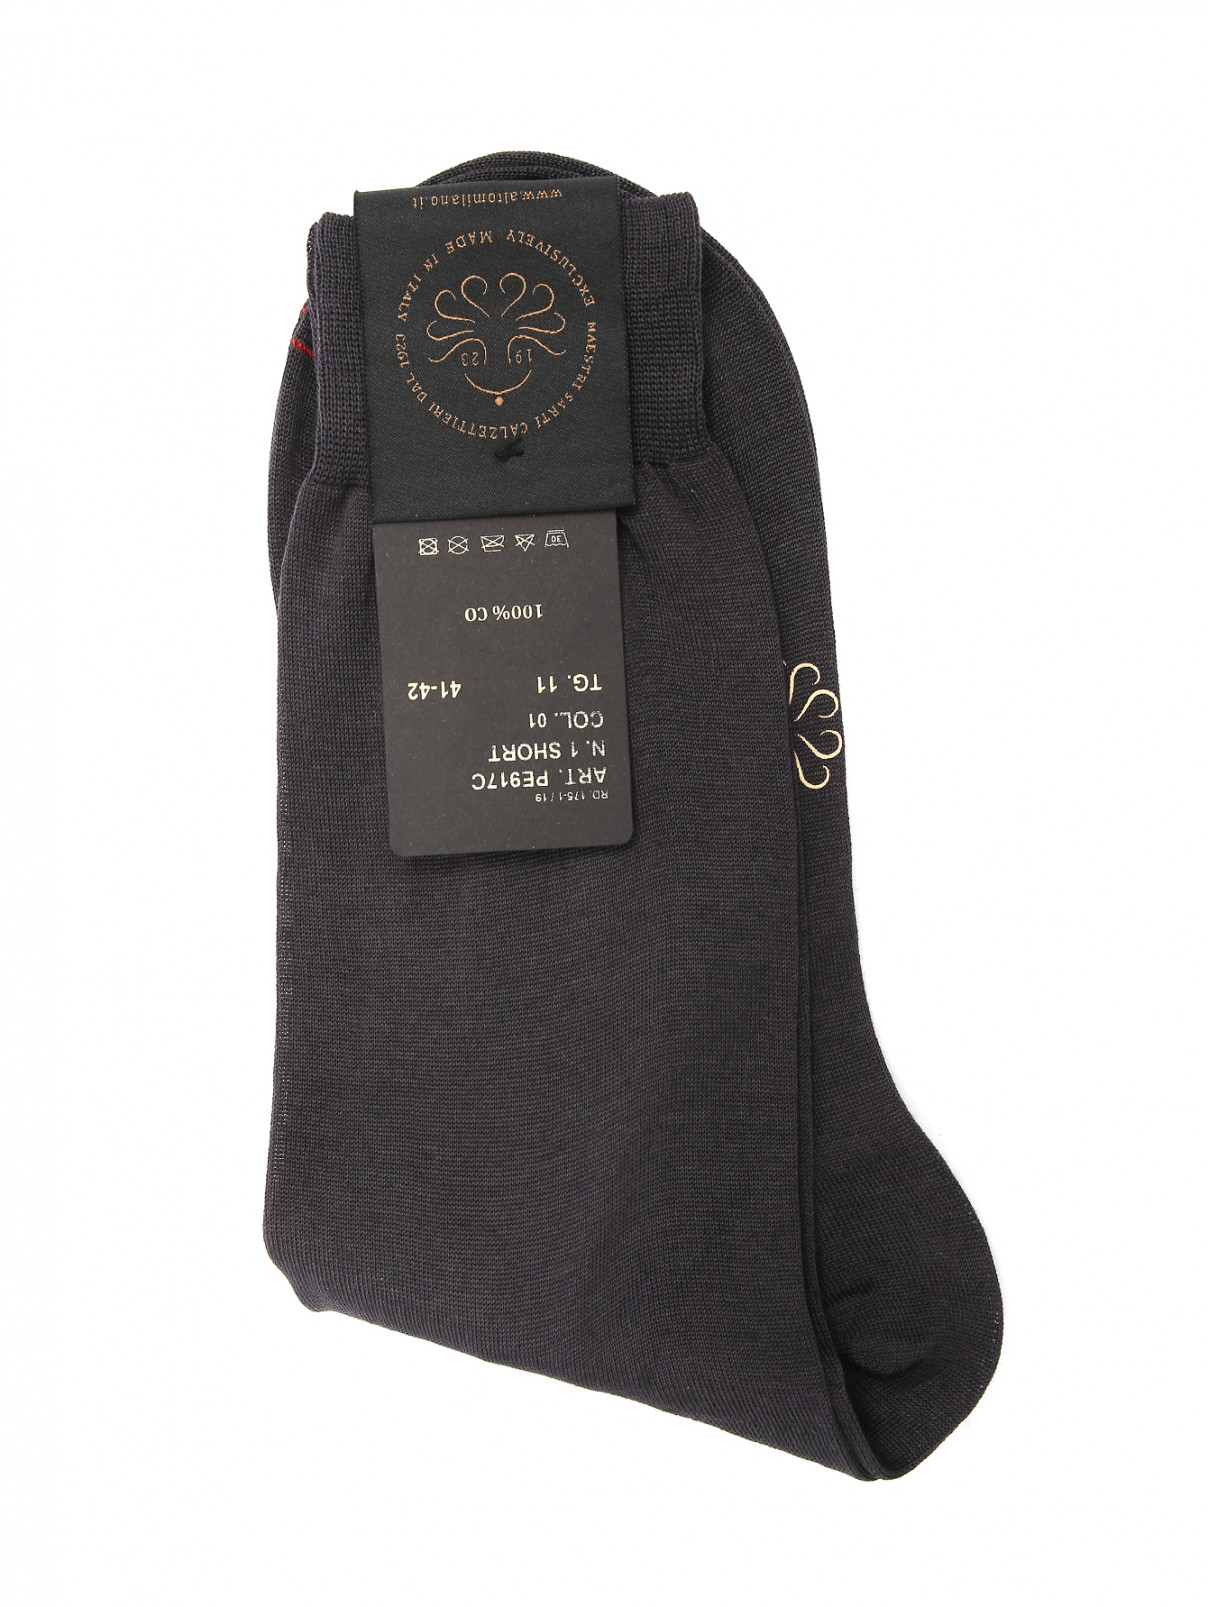 Носки из хлопка Peekaboo  –  Общий вид  – Цвет:  Серый